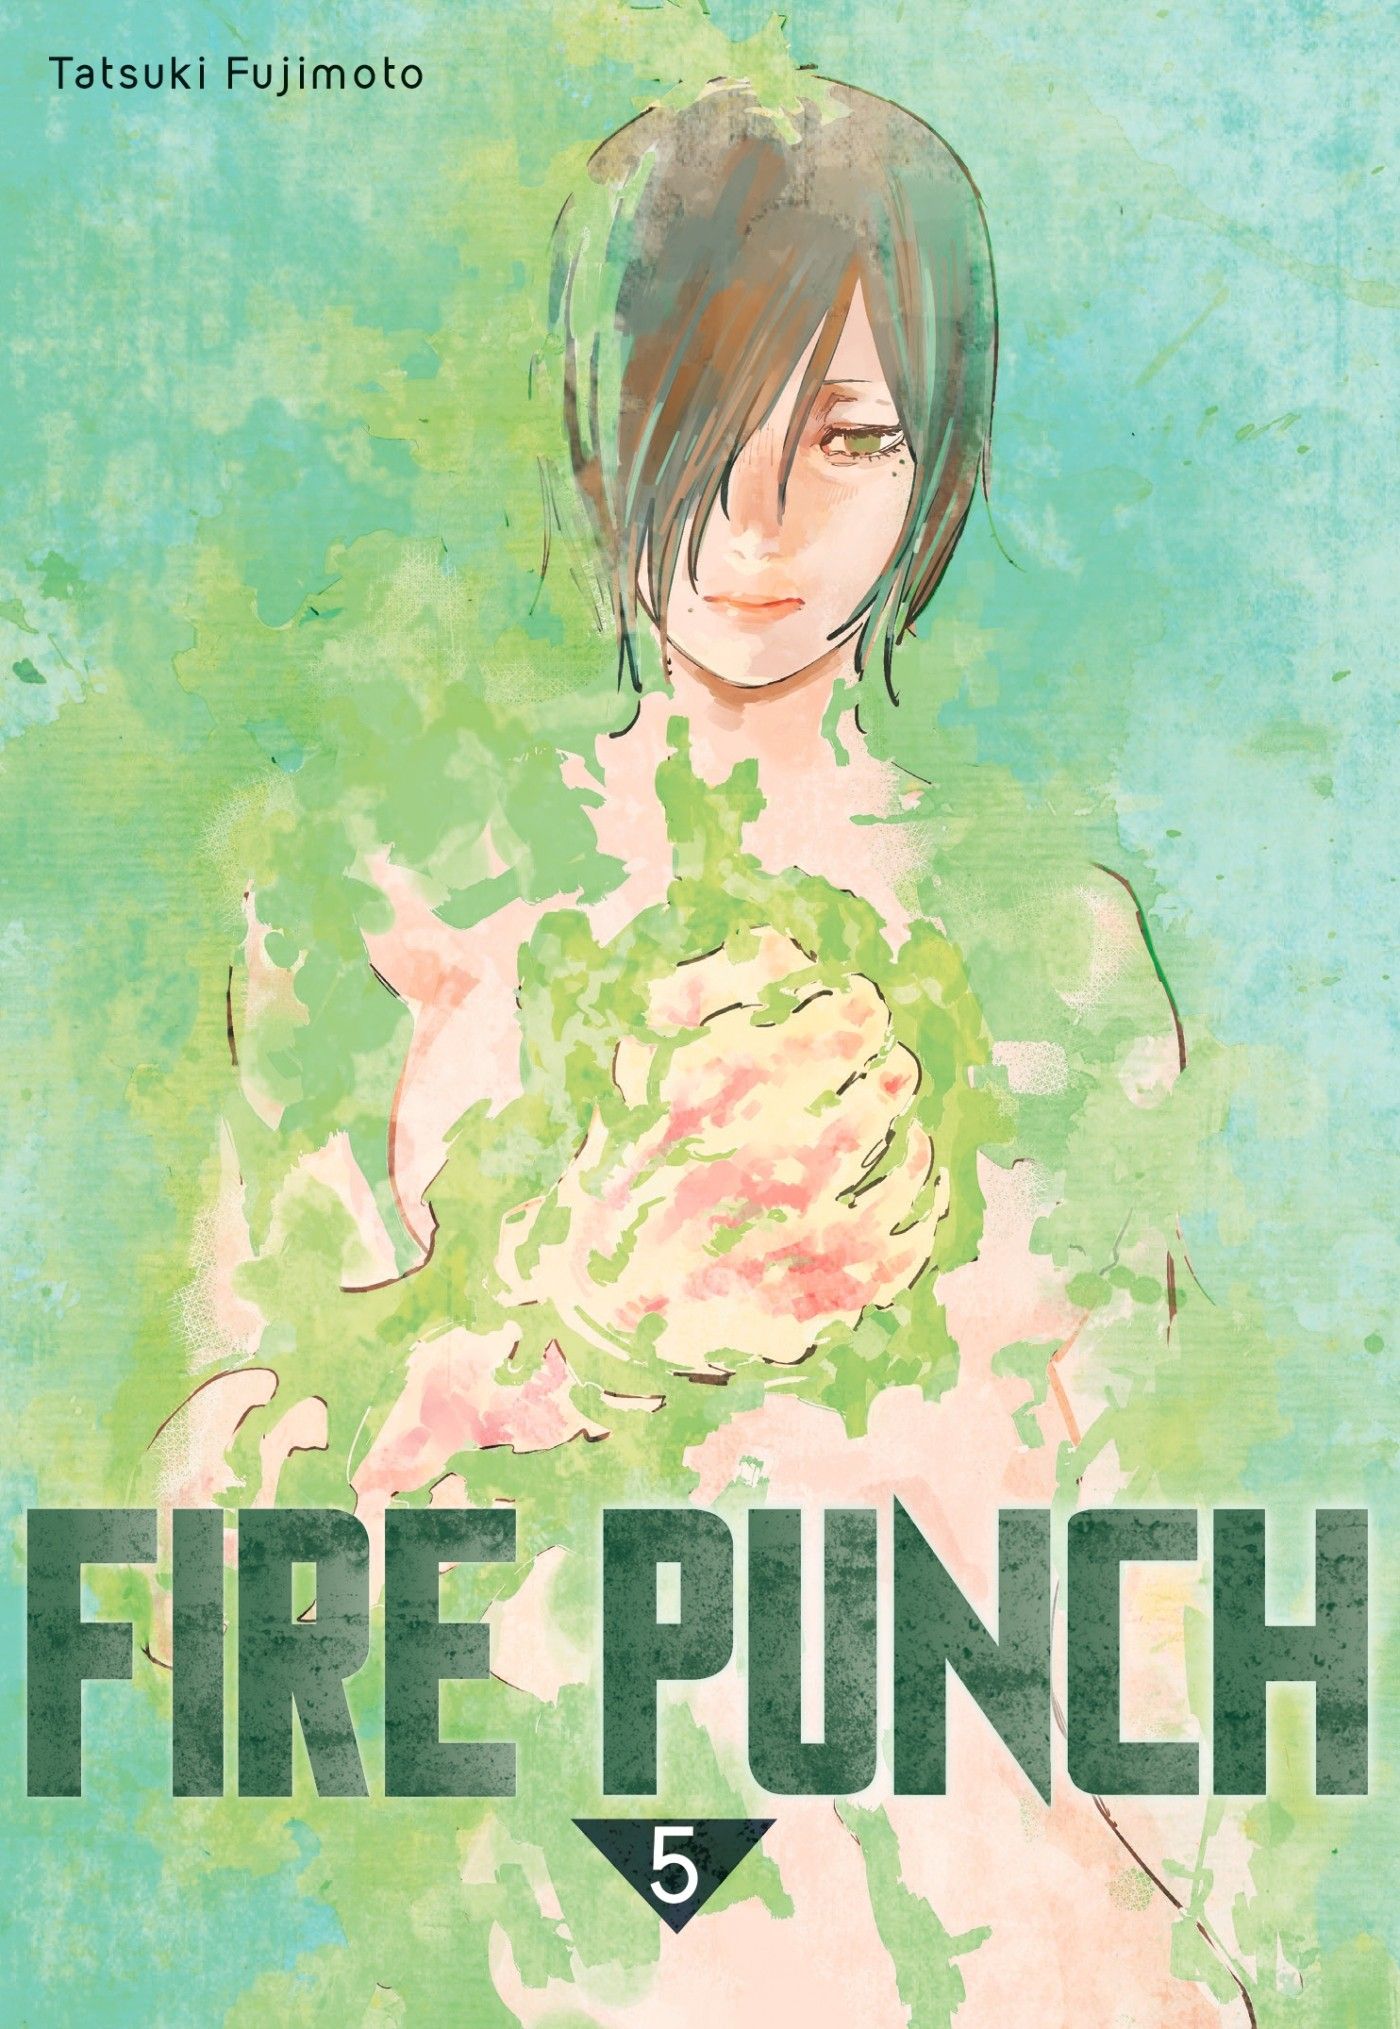 Fire Punch Tome 5 Tatsuki Fujimoto Senscritique 